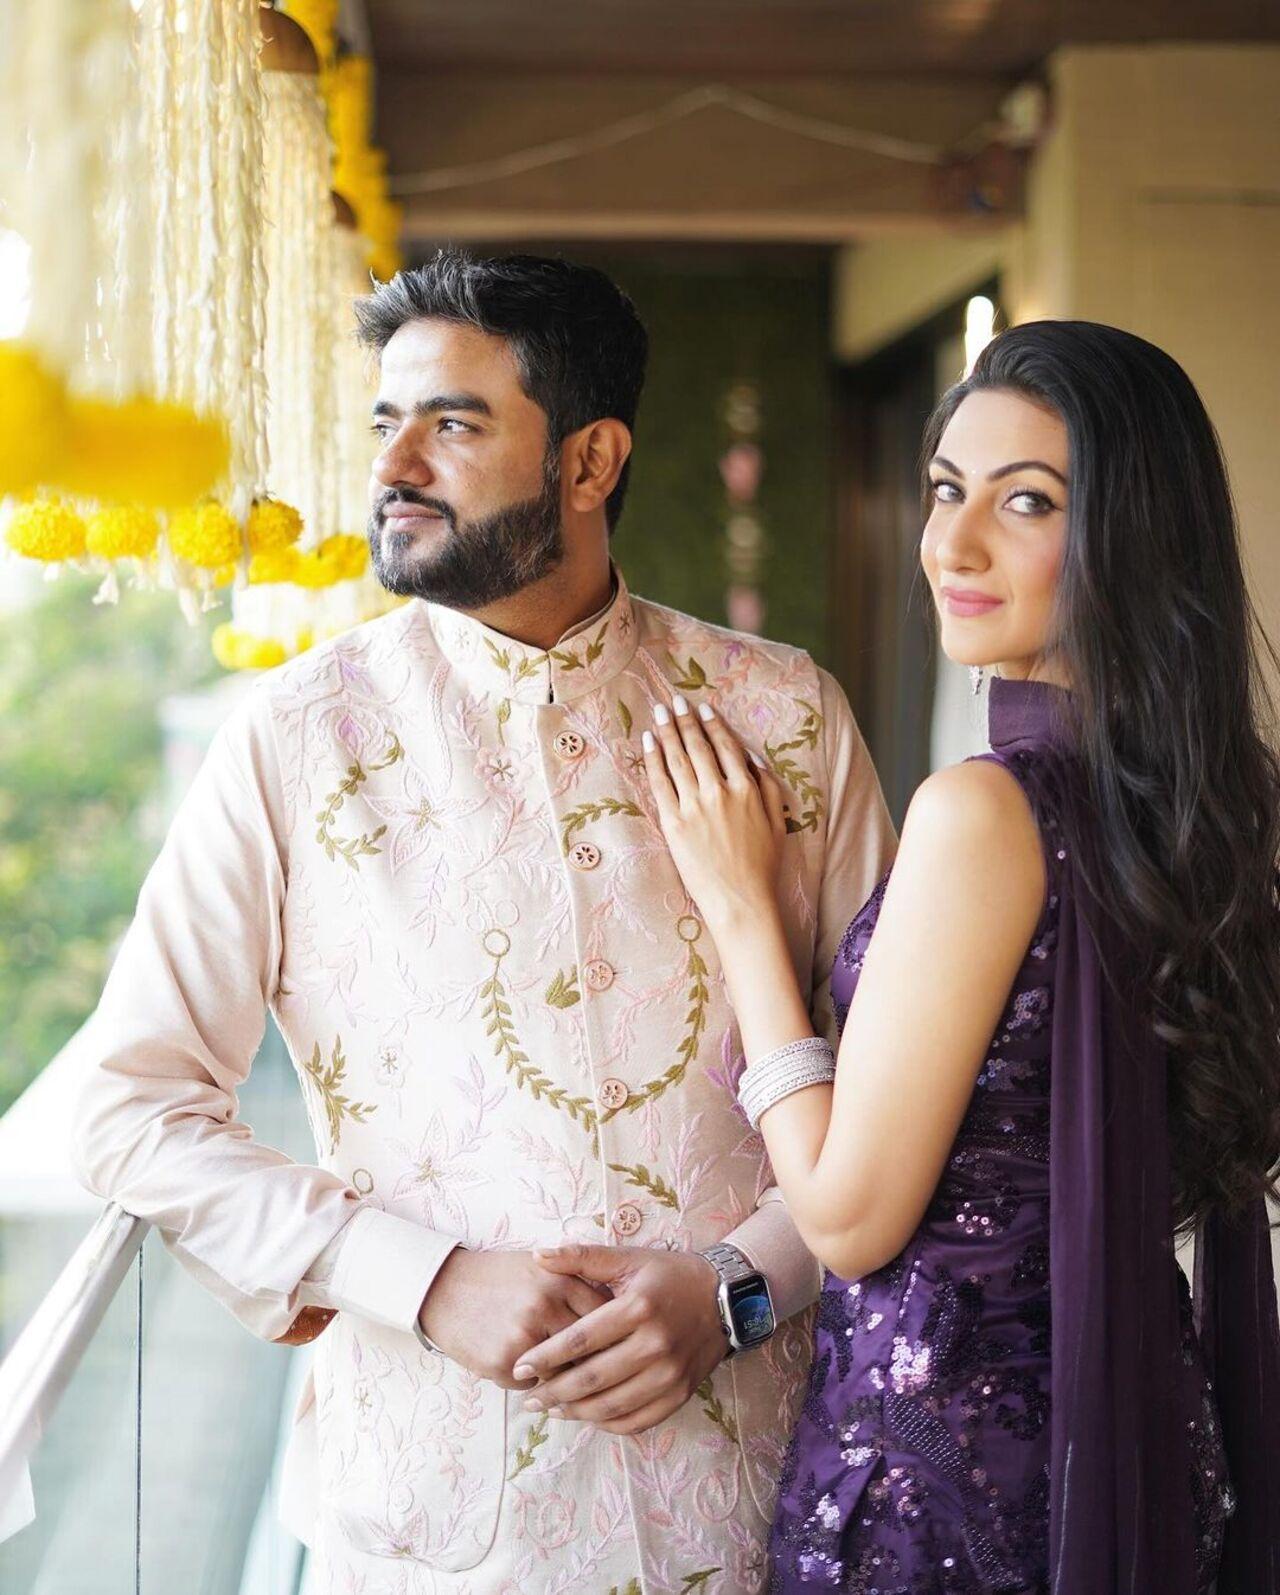 Priyanka Chopra's younger brother Siddharth got engaged to his long-time girlfriend Neelam Upadhyaya in an intimate ceremony in Mumbai